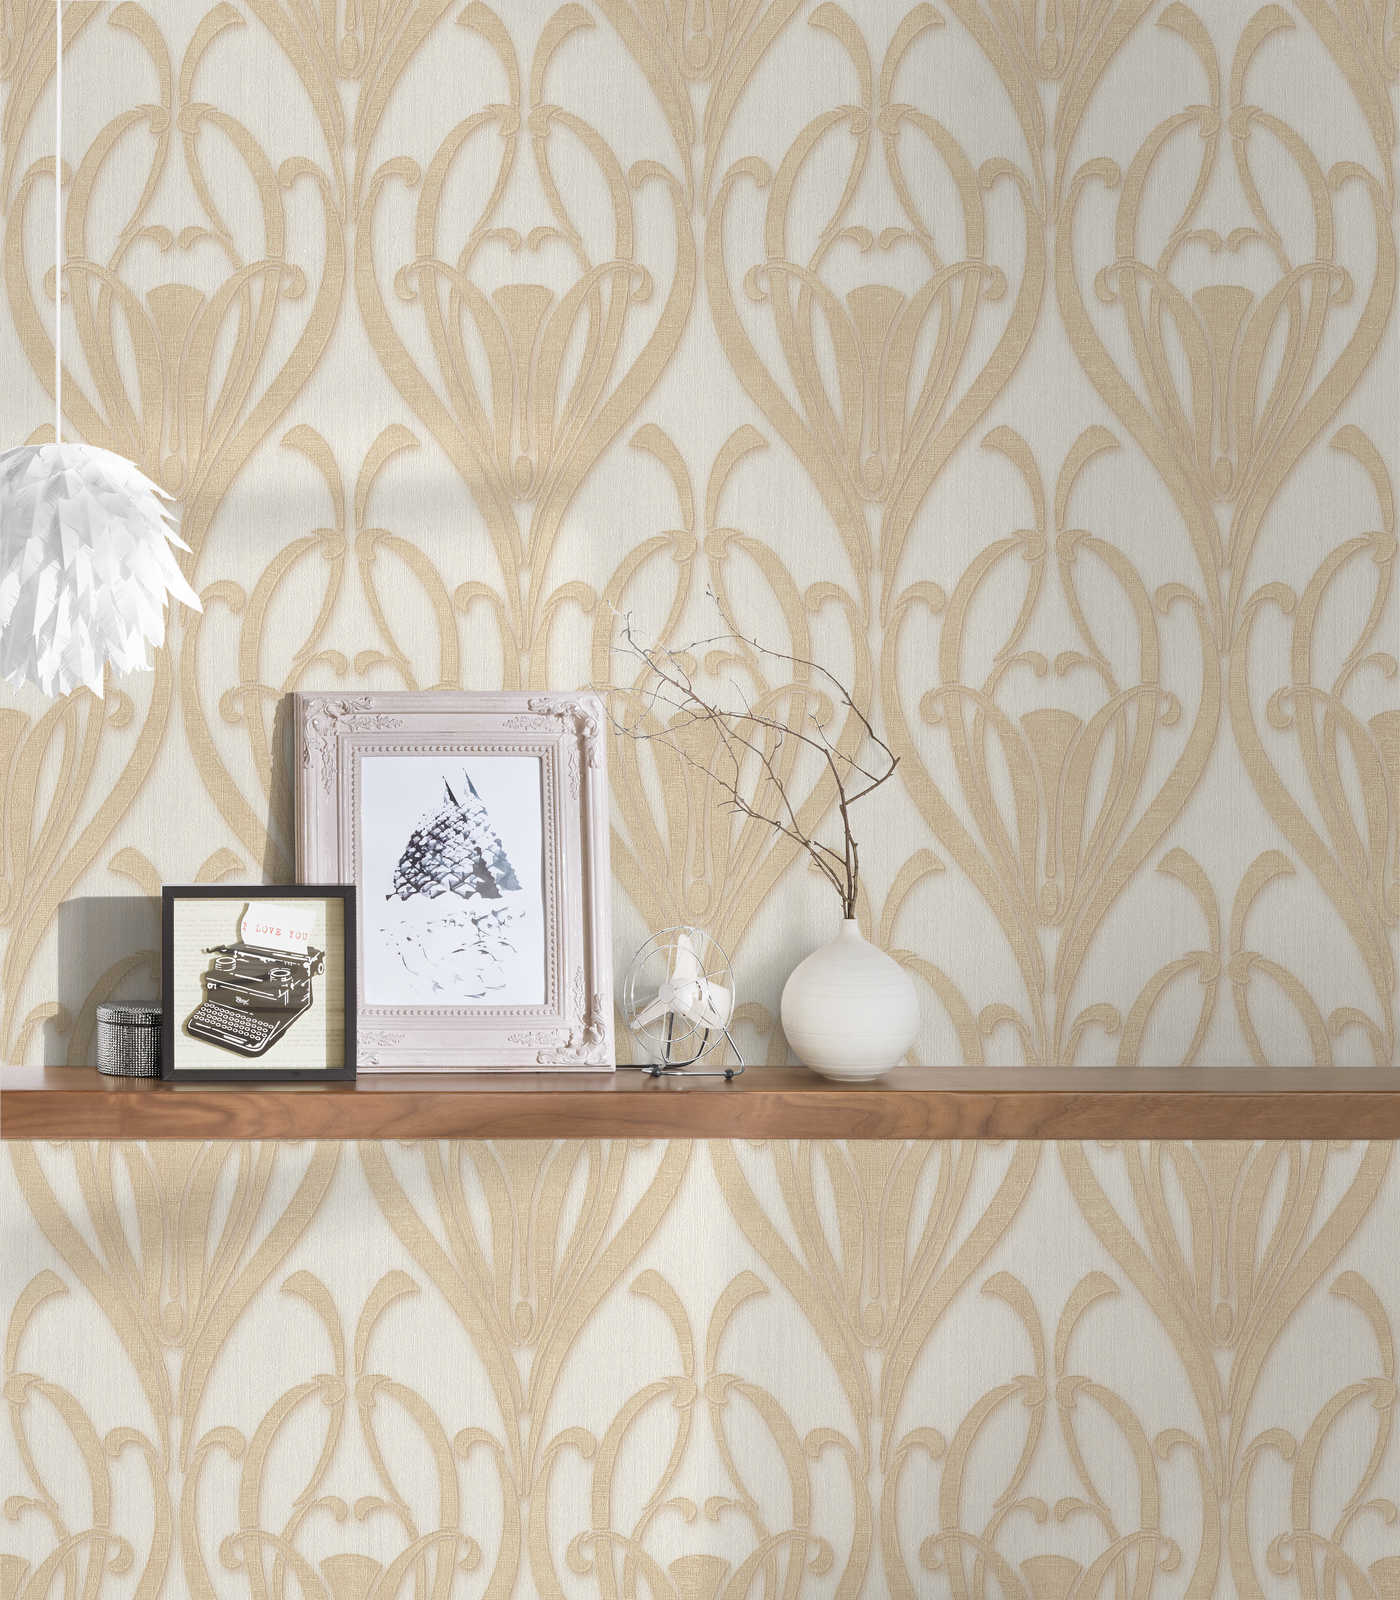             Art Deco Tapete mit goldenem Muster & Textilstruktur
        